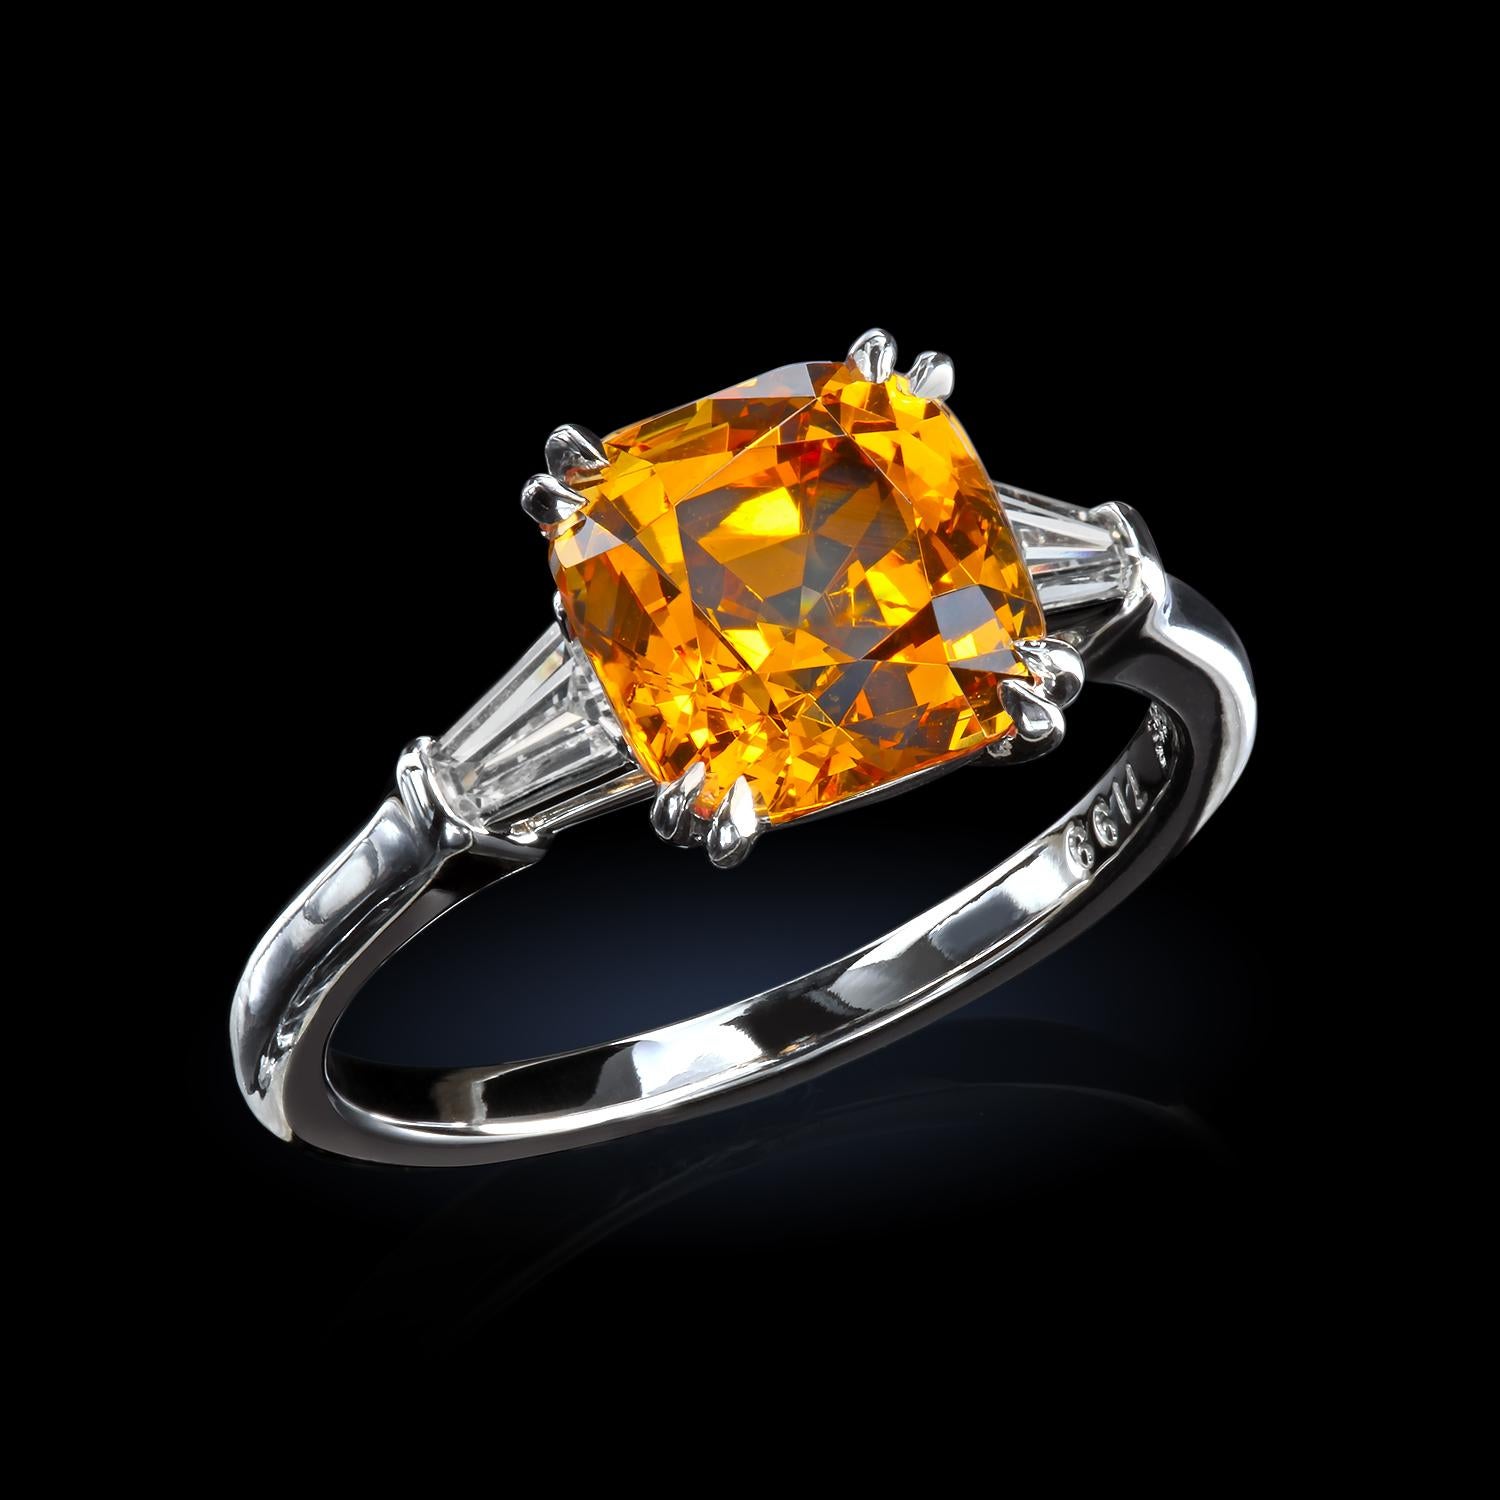 Leon Mege Platinum Three-Stone Ring with Mandarin Garnet and Diamond Baguettes For Sale 1